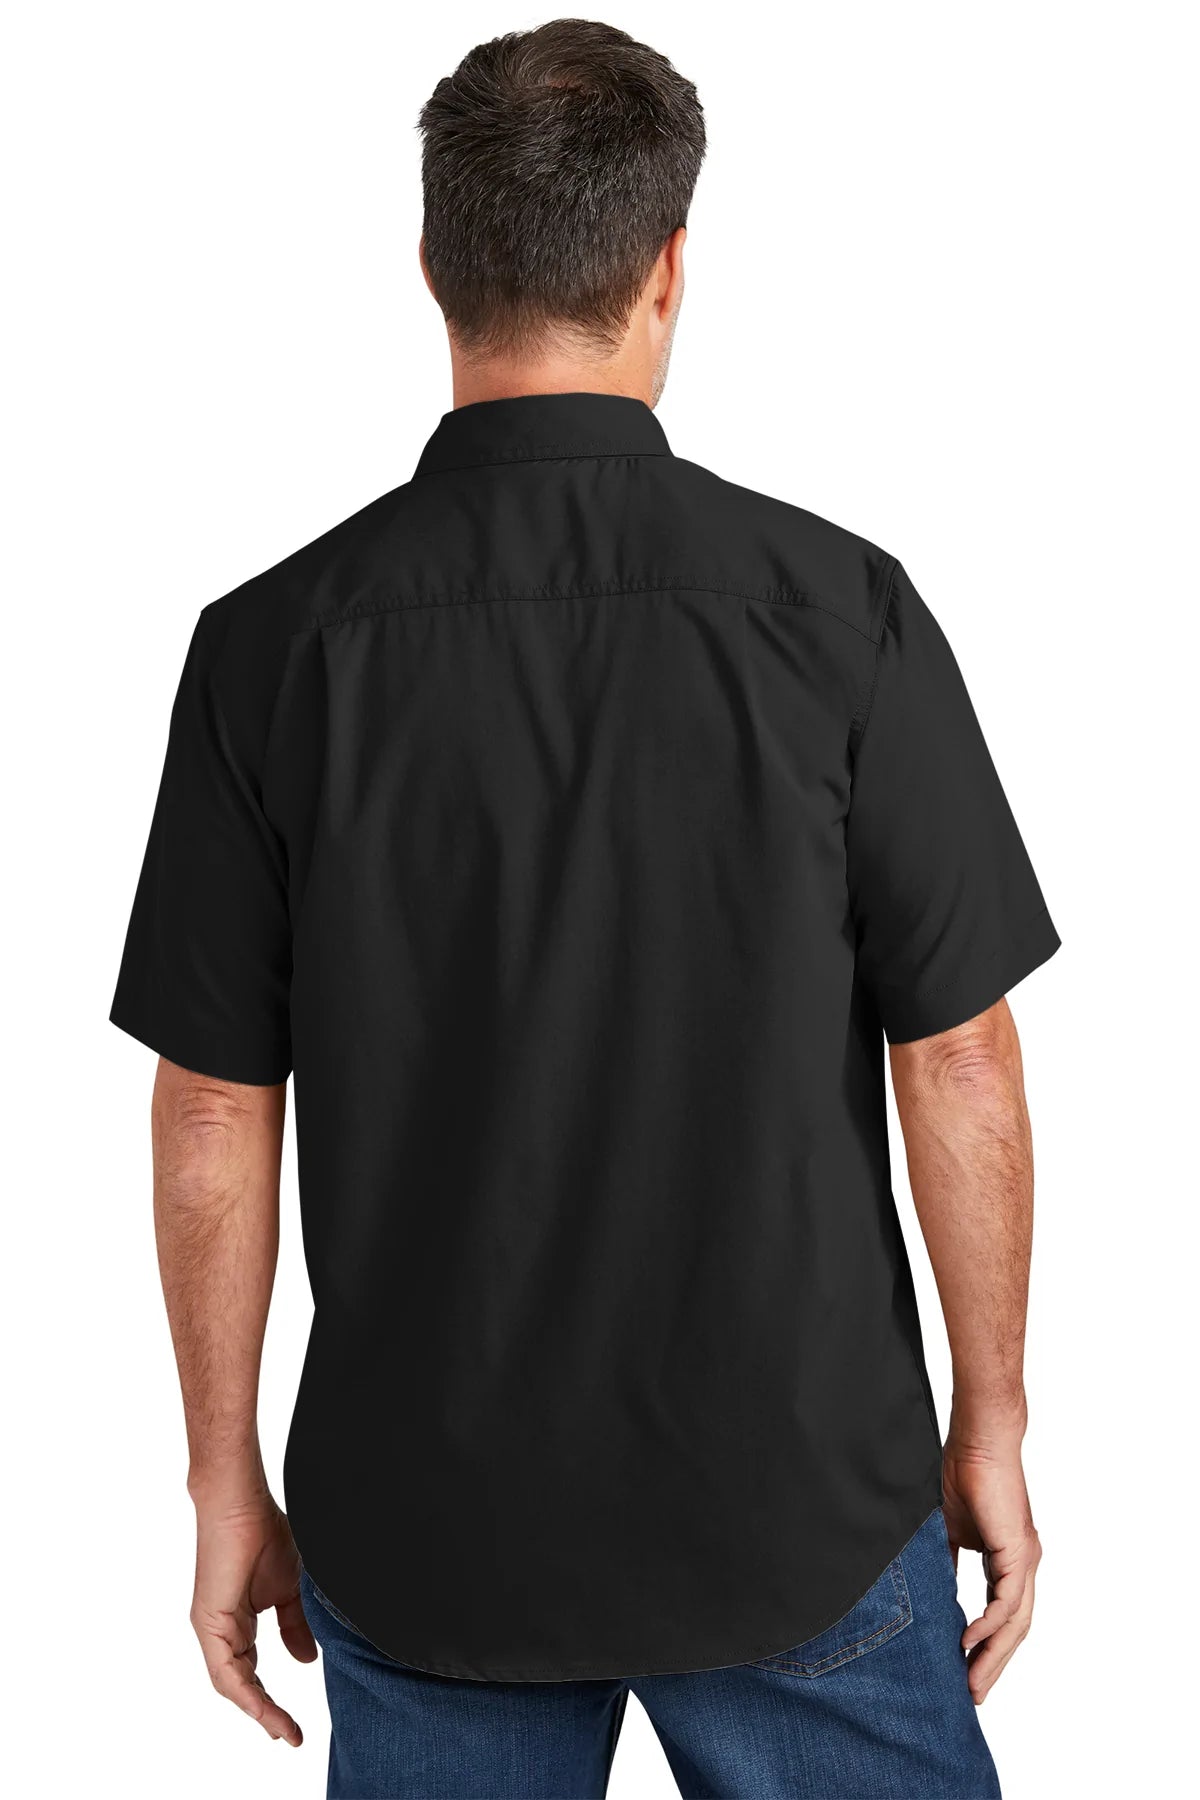 Carhartt Force Solid Custom Shirts, Black